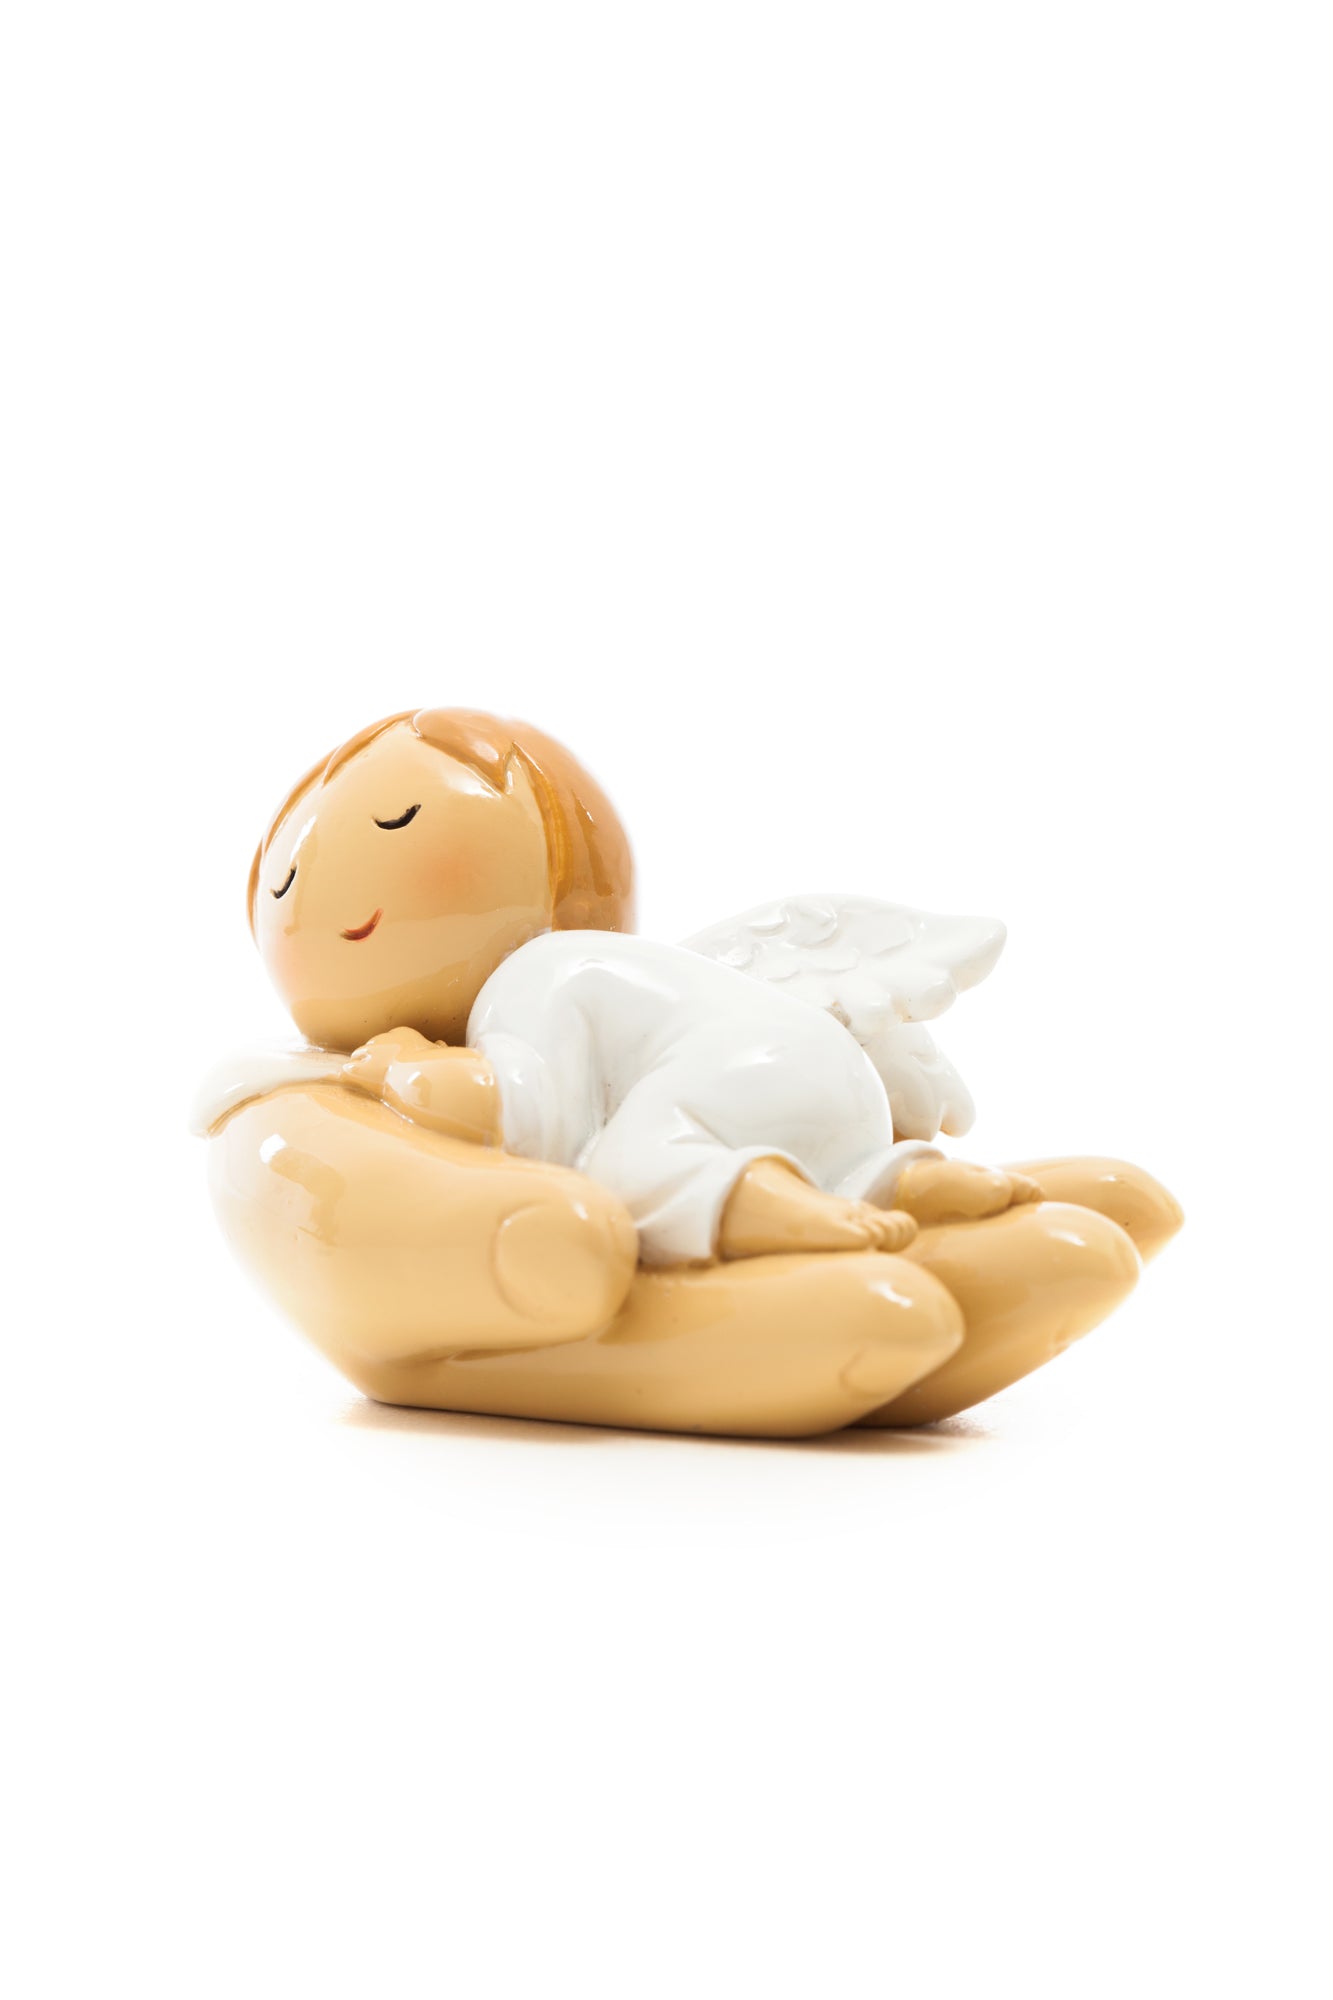 Baby Angel Sleeping on Hand statue